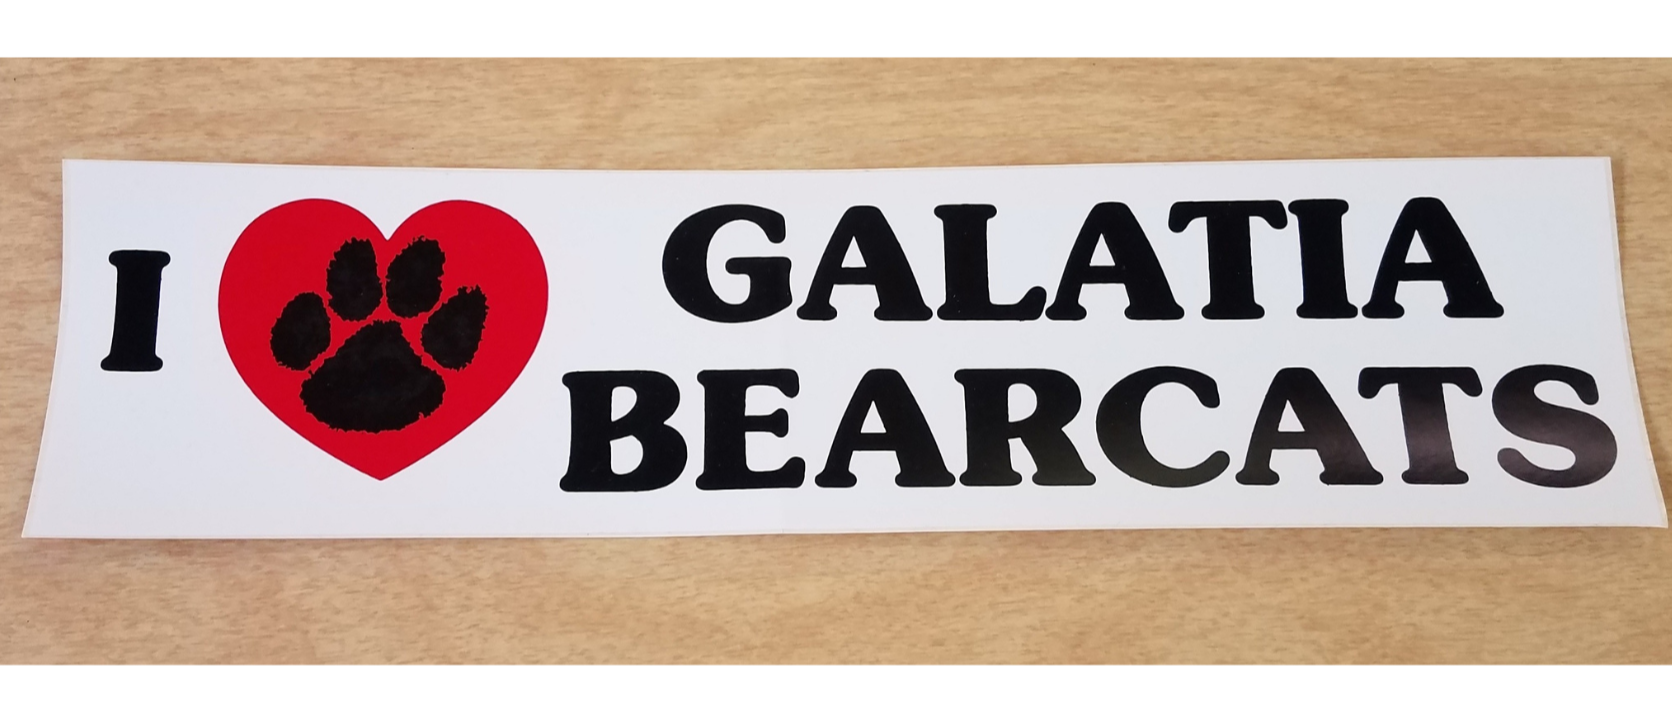 Banner that says "I heart Galatia Bearcats"